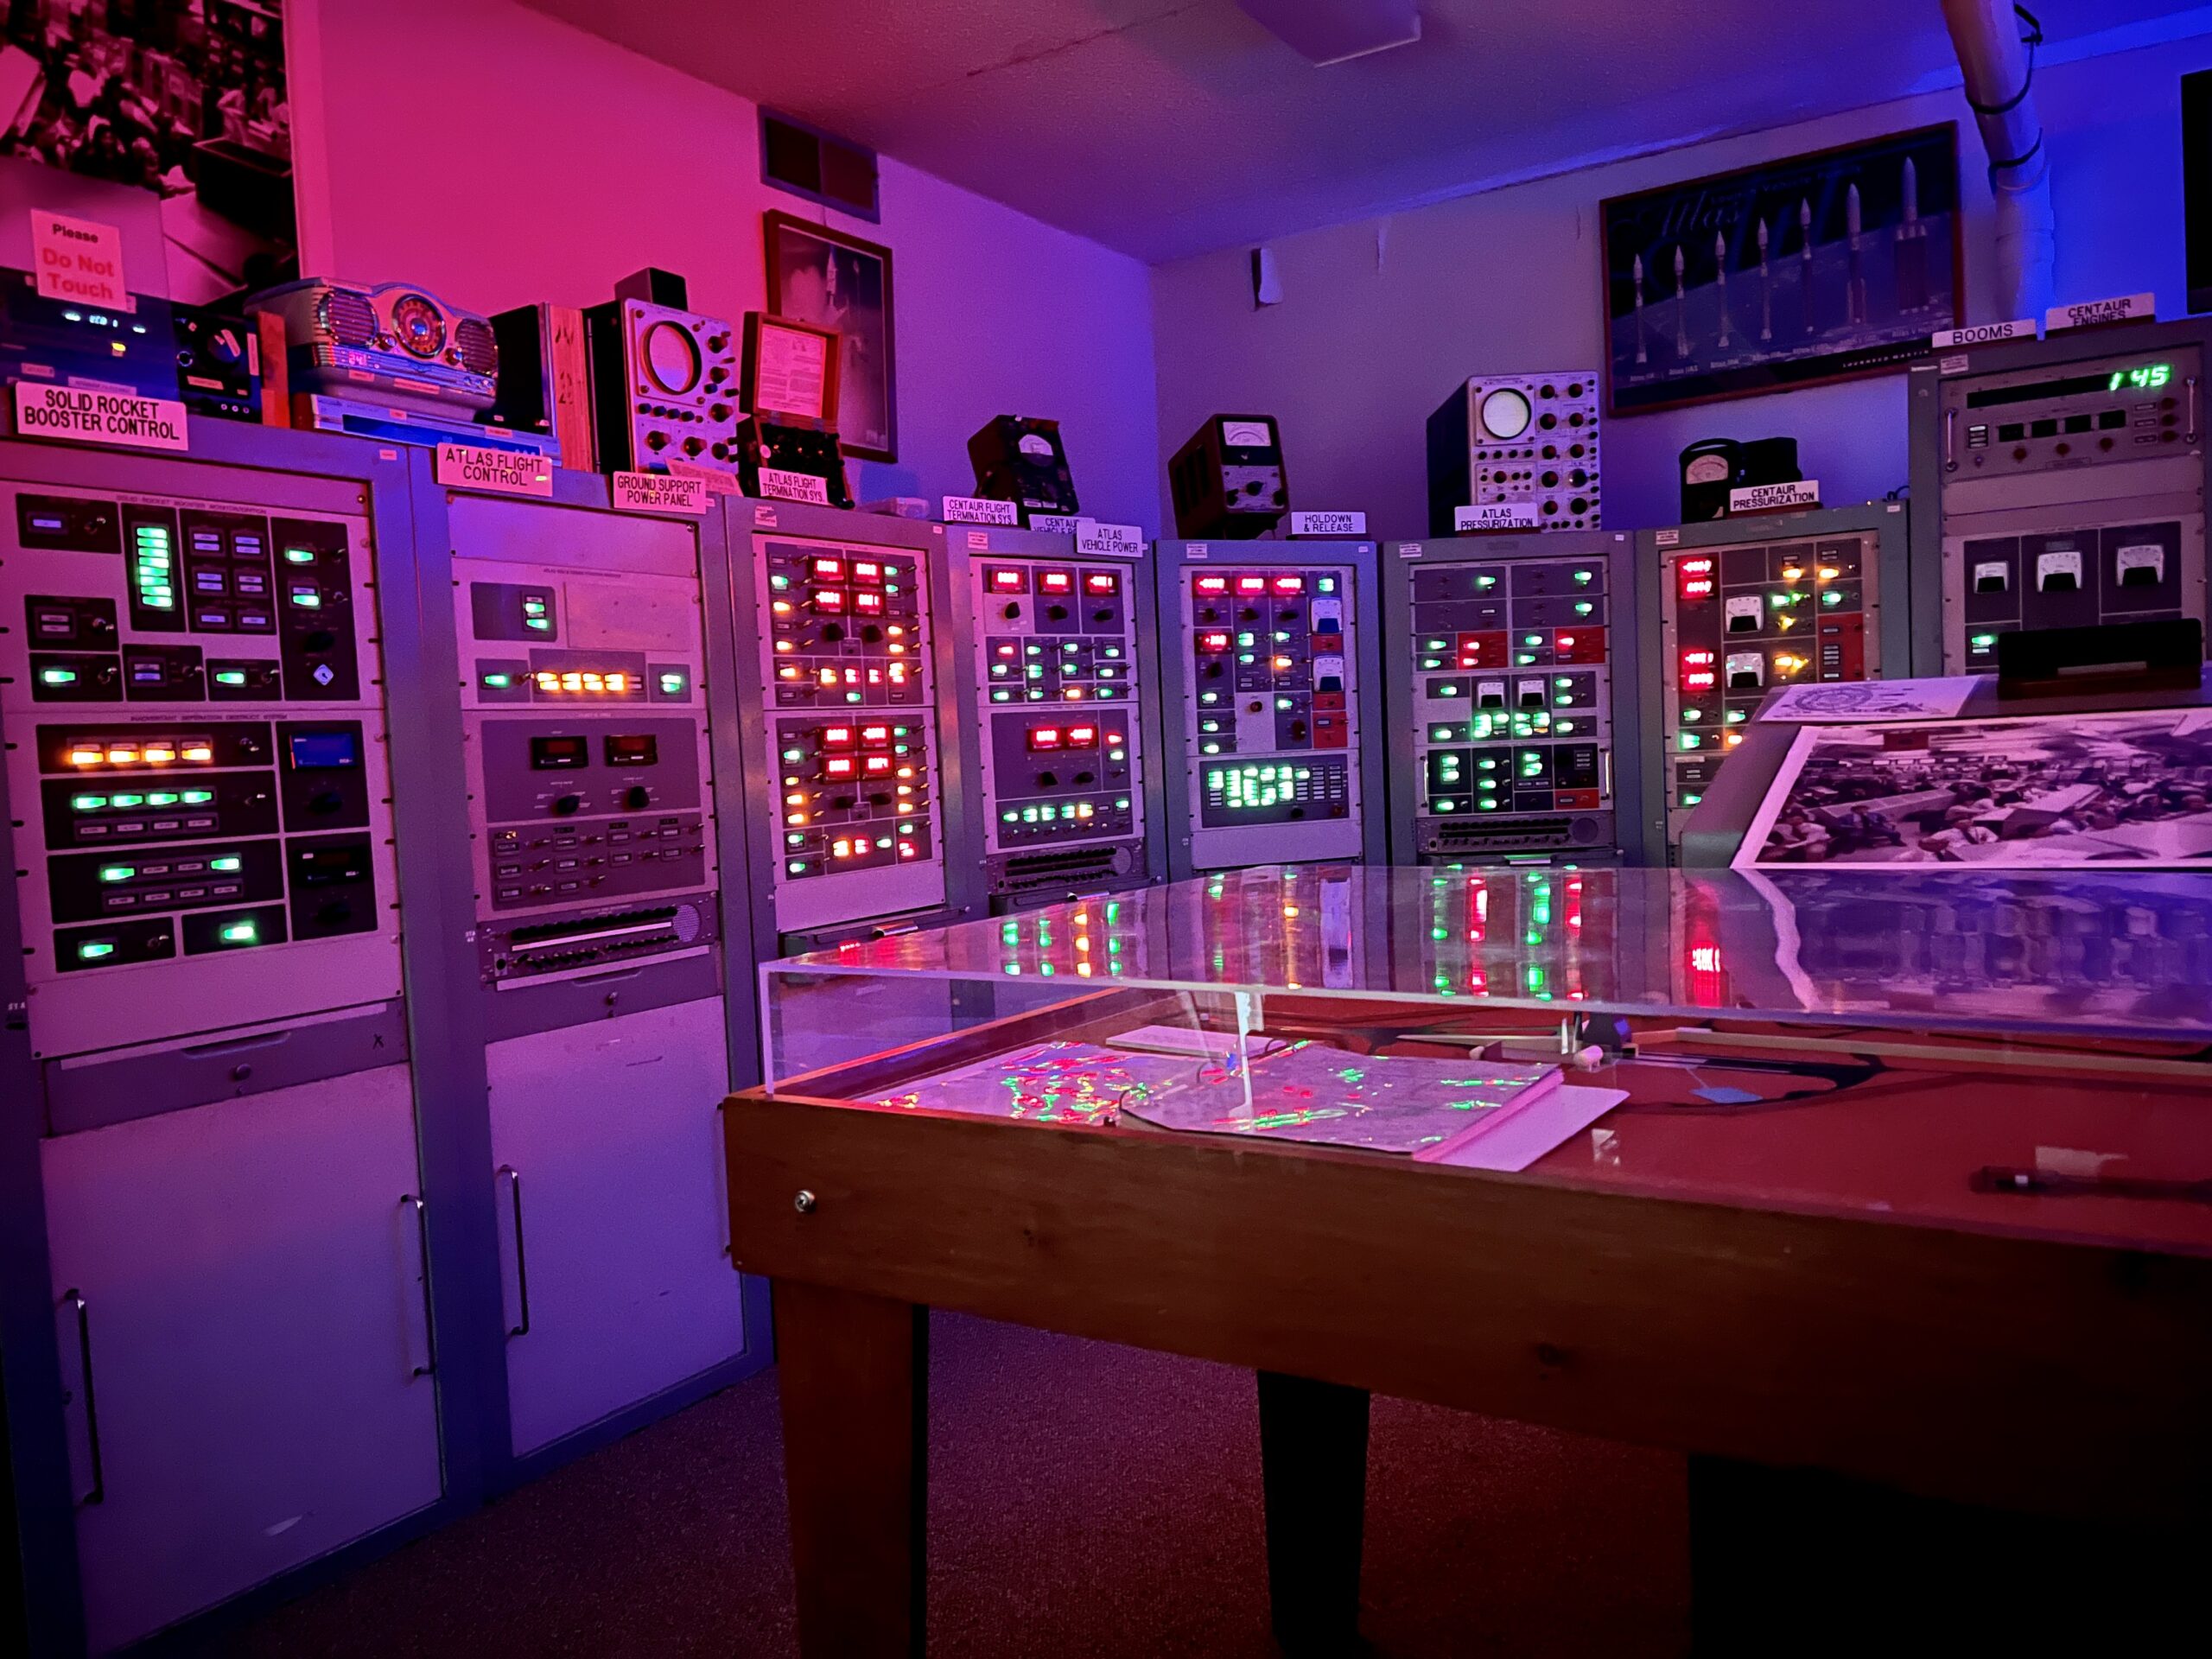 Control panel in American Space Museum in Titusville FL